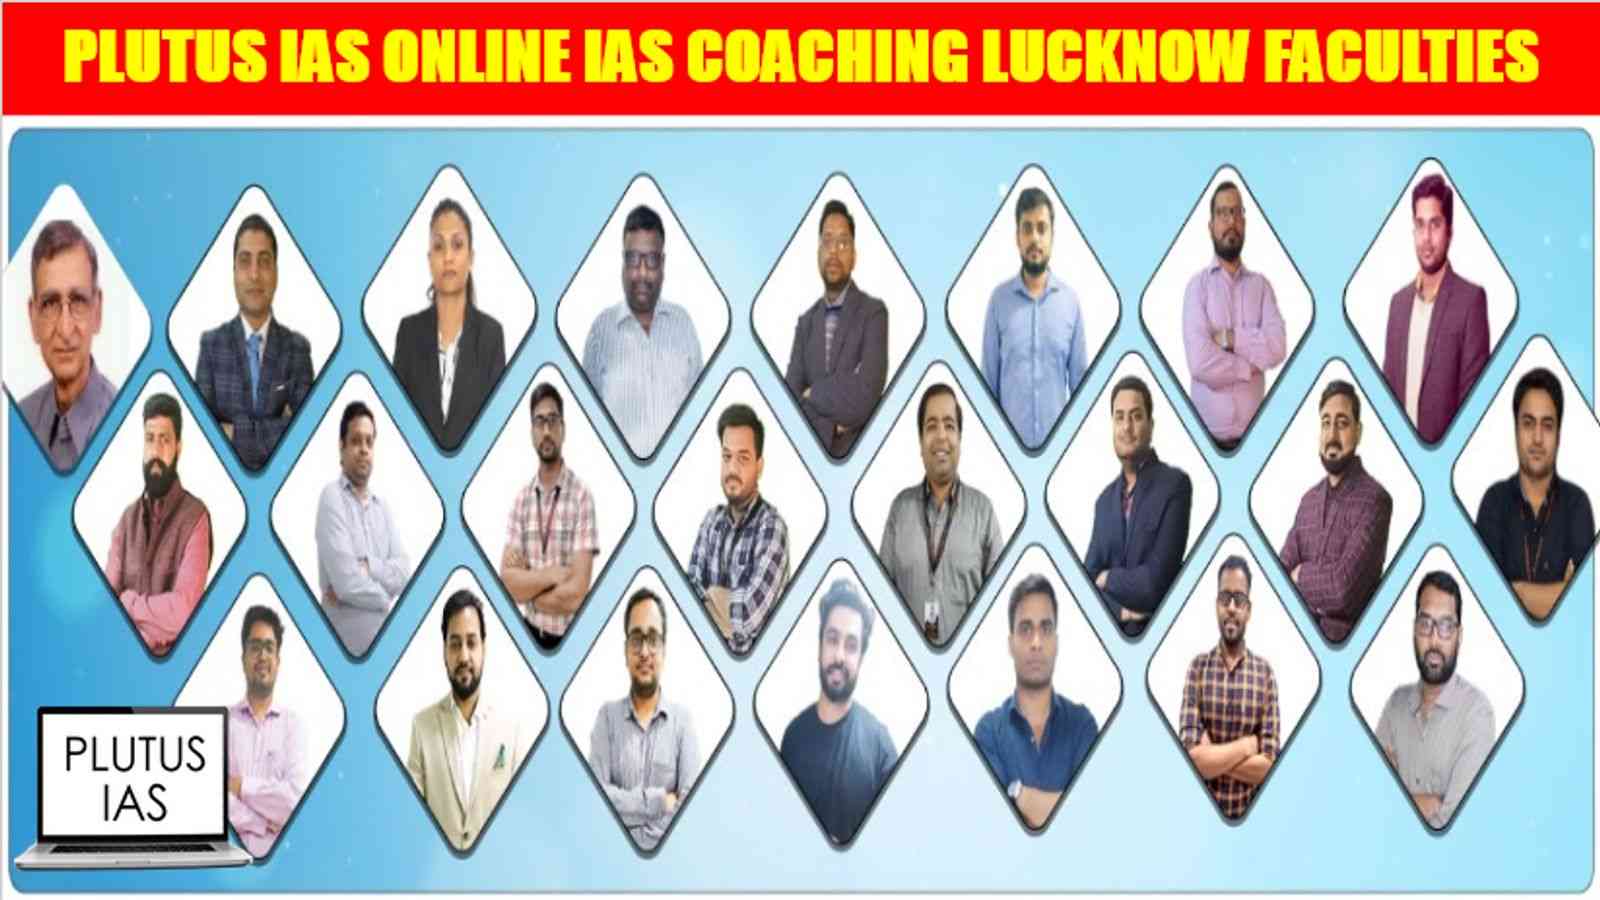 Plutus IAS Online Coaching Lucknow Faculties